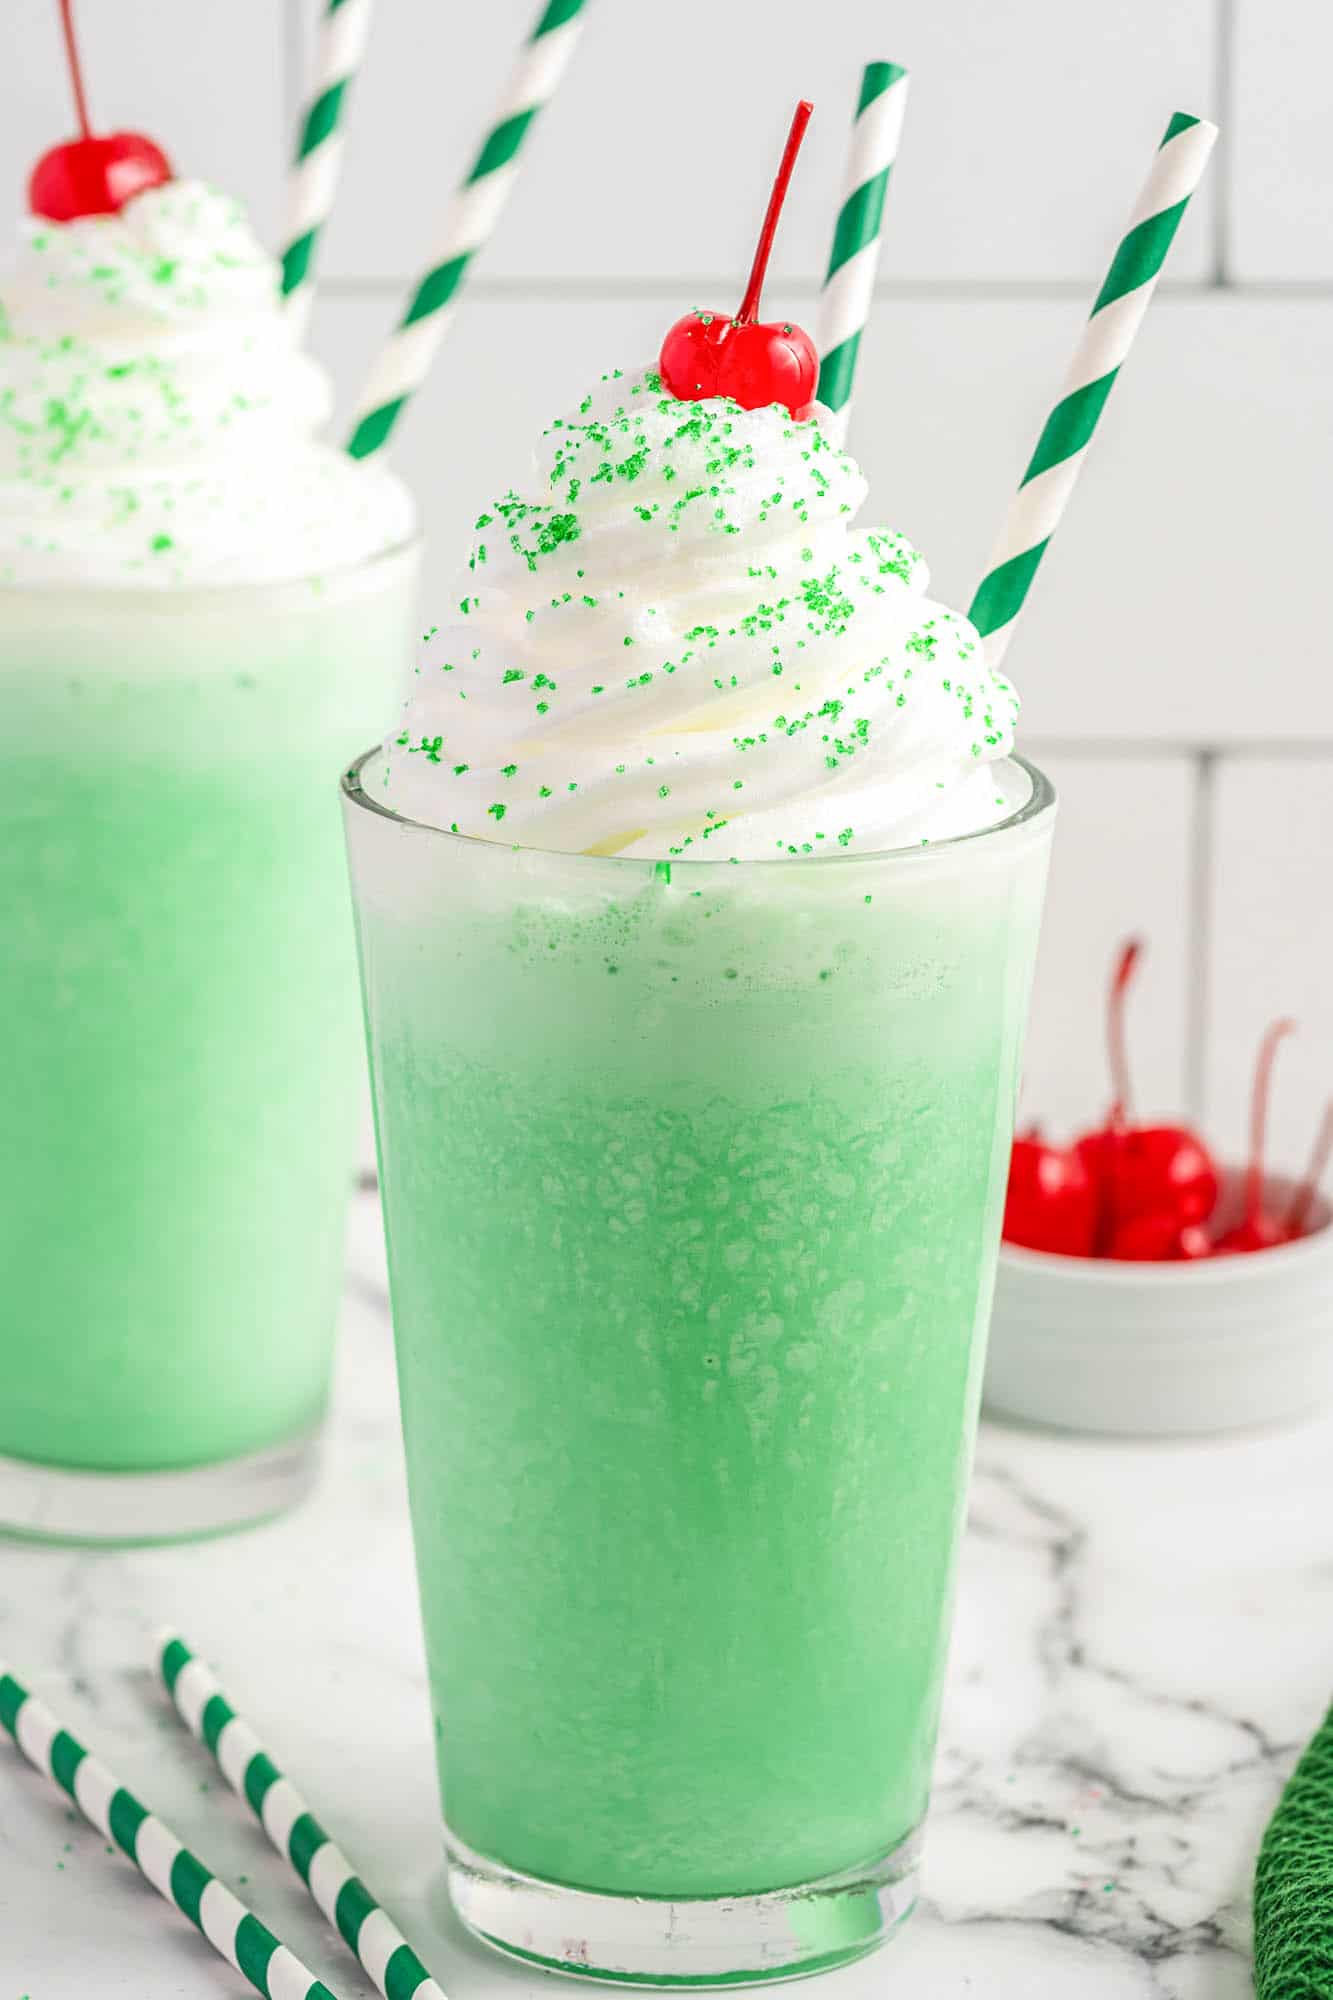 Milkshake glasses filled with green shamrock shake, topped with whipped cream and maraschino cherries.